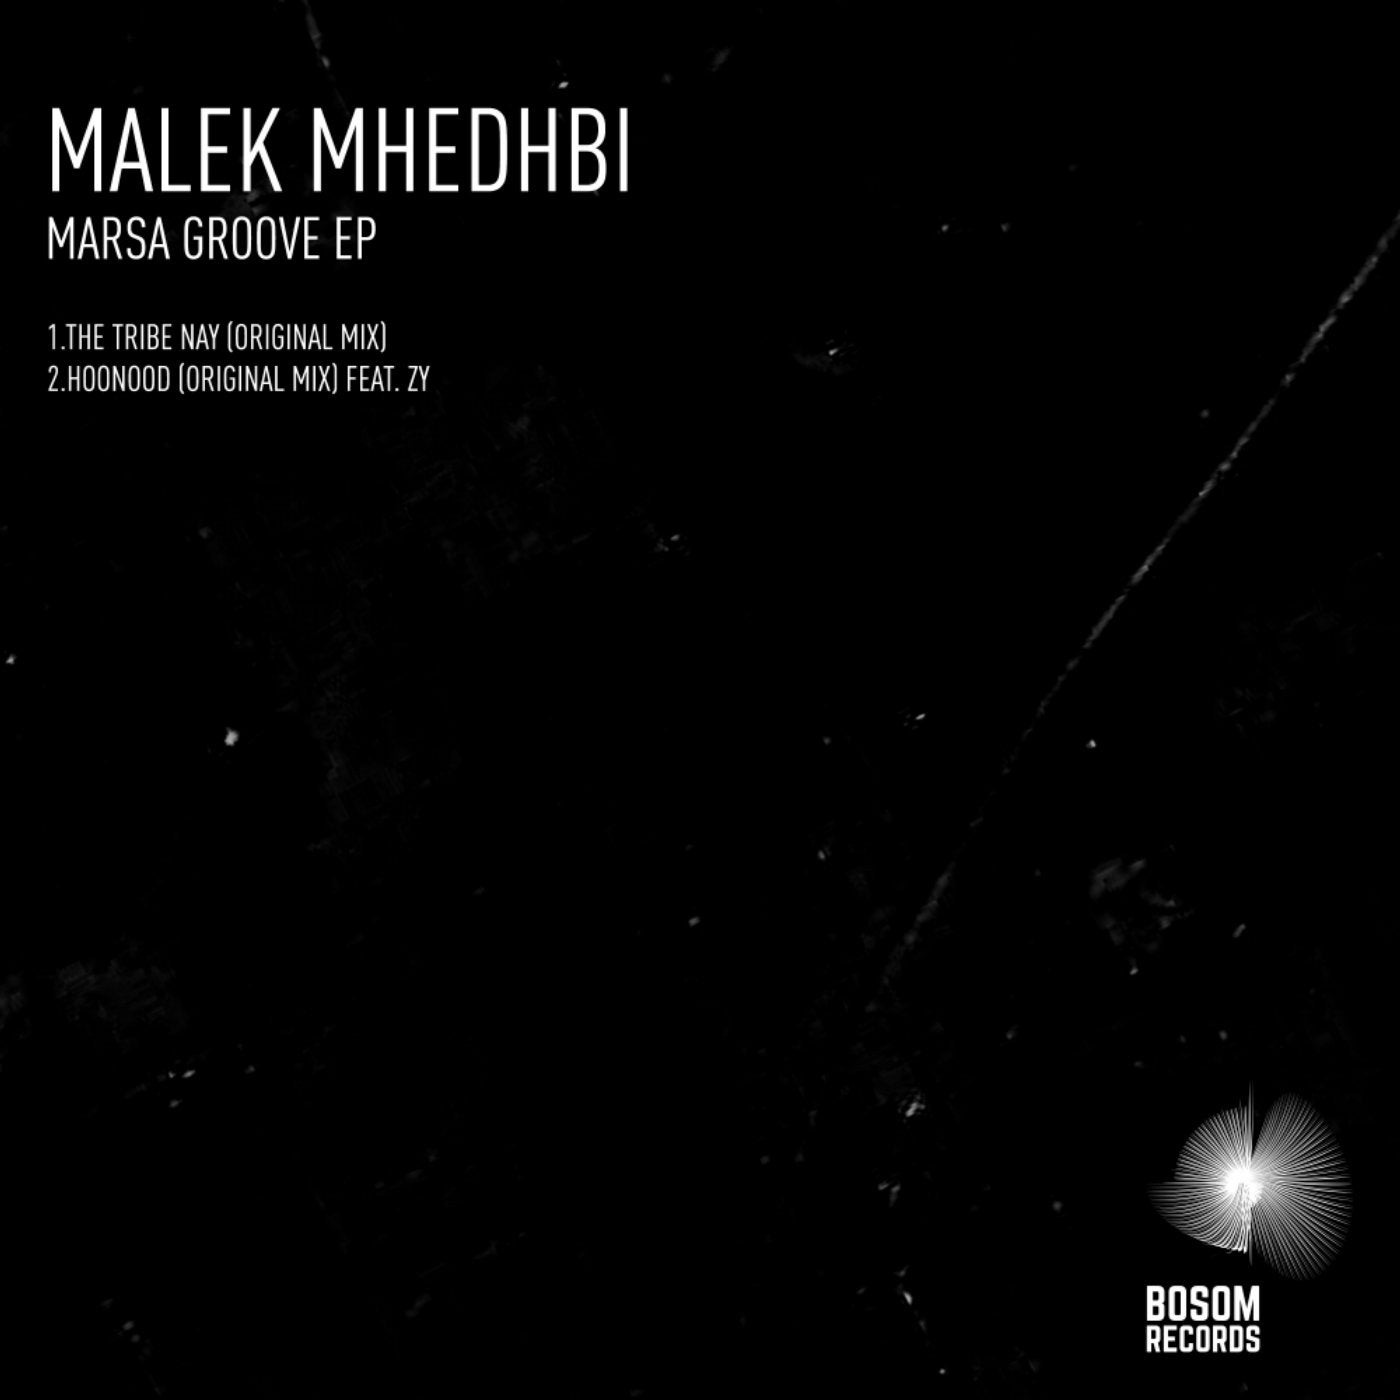 Marsa Groove EP